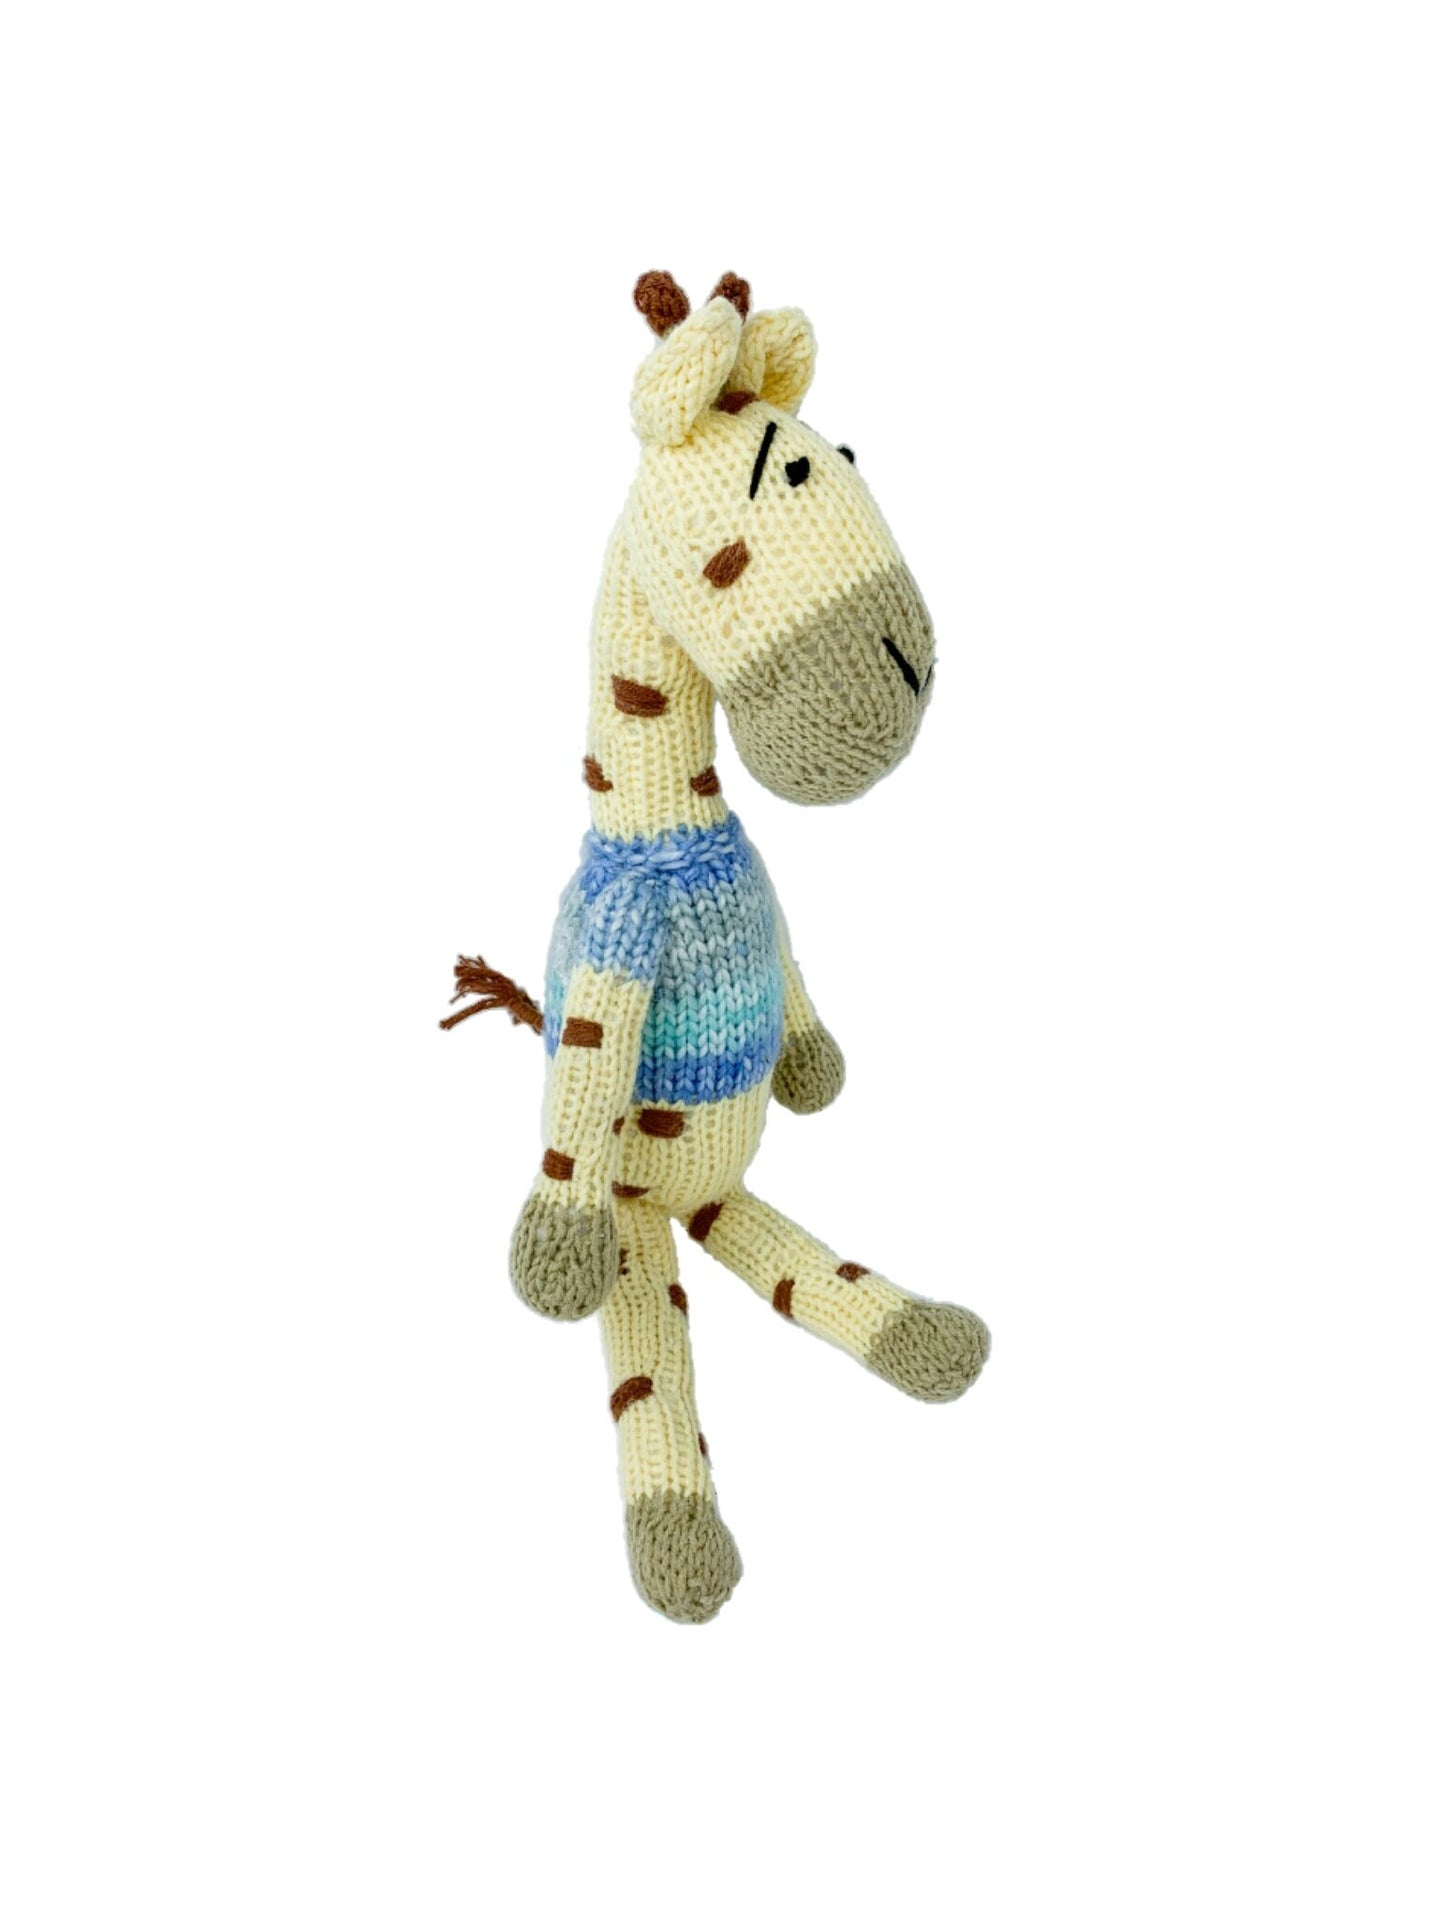 Jumbo Giraffe Handmade Crochet stuffed Doll for Montessori Play, Nursery Decor, and Baby Shower Gifts . Granddaughter, niece, nephew & grandson